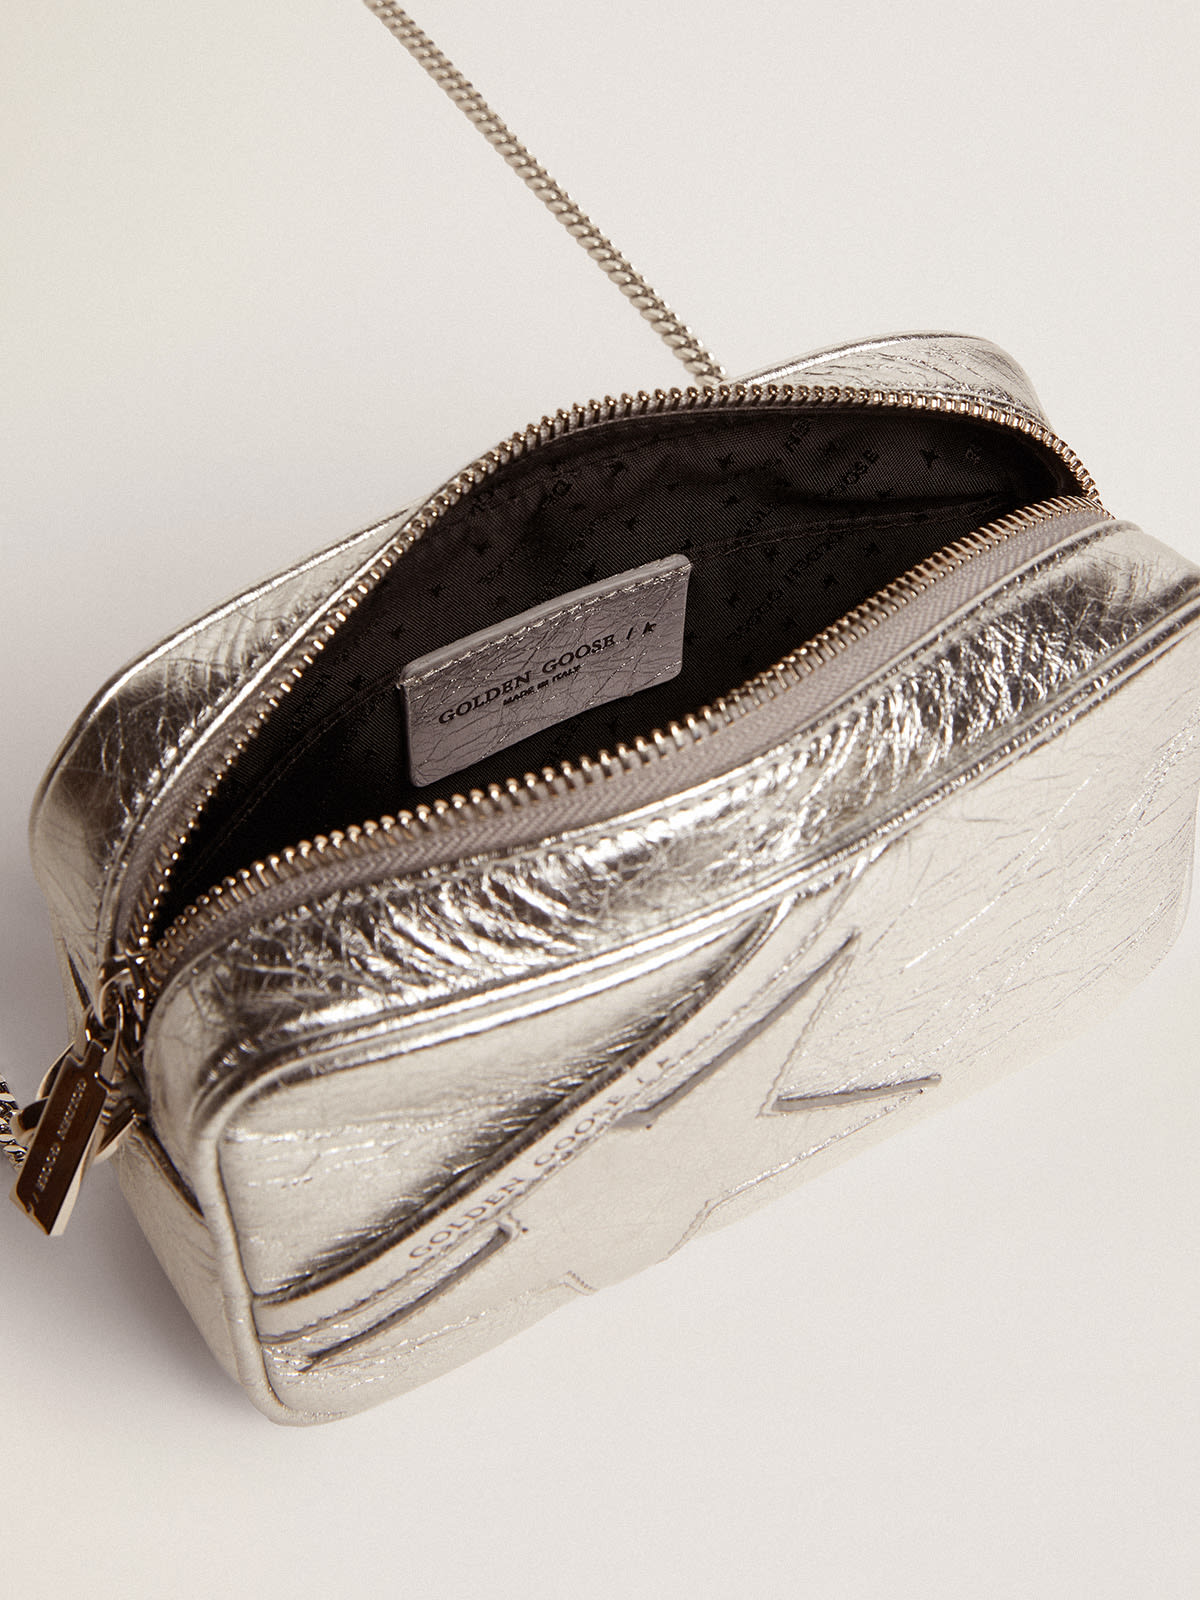 Golden Goose - Mini Star Bag de piel laminada plateada y estrella tono sobre tono in 